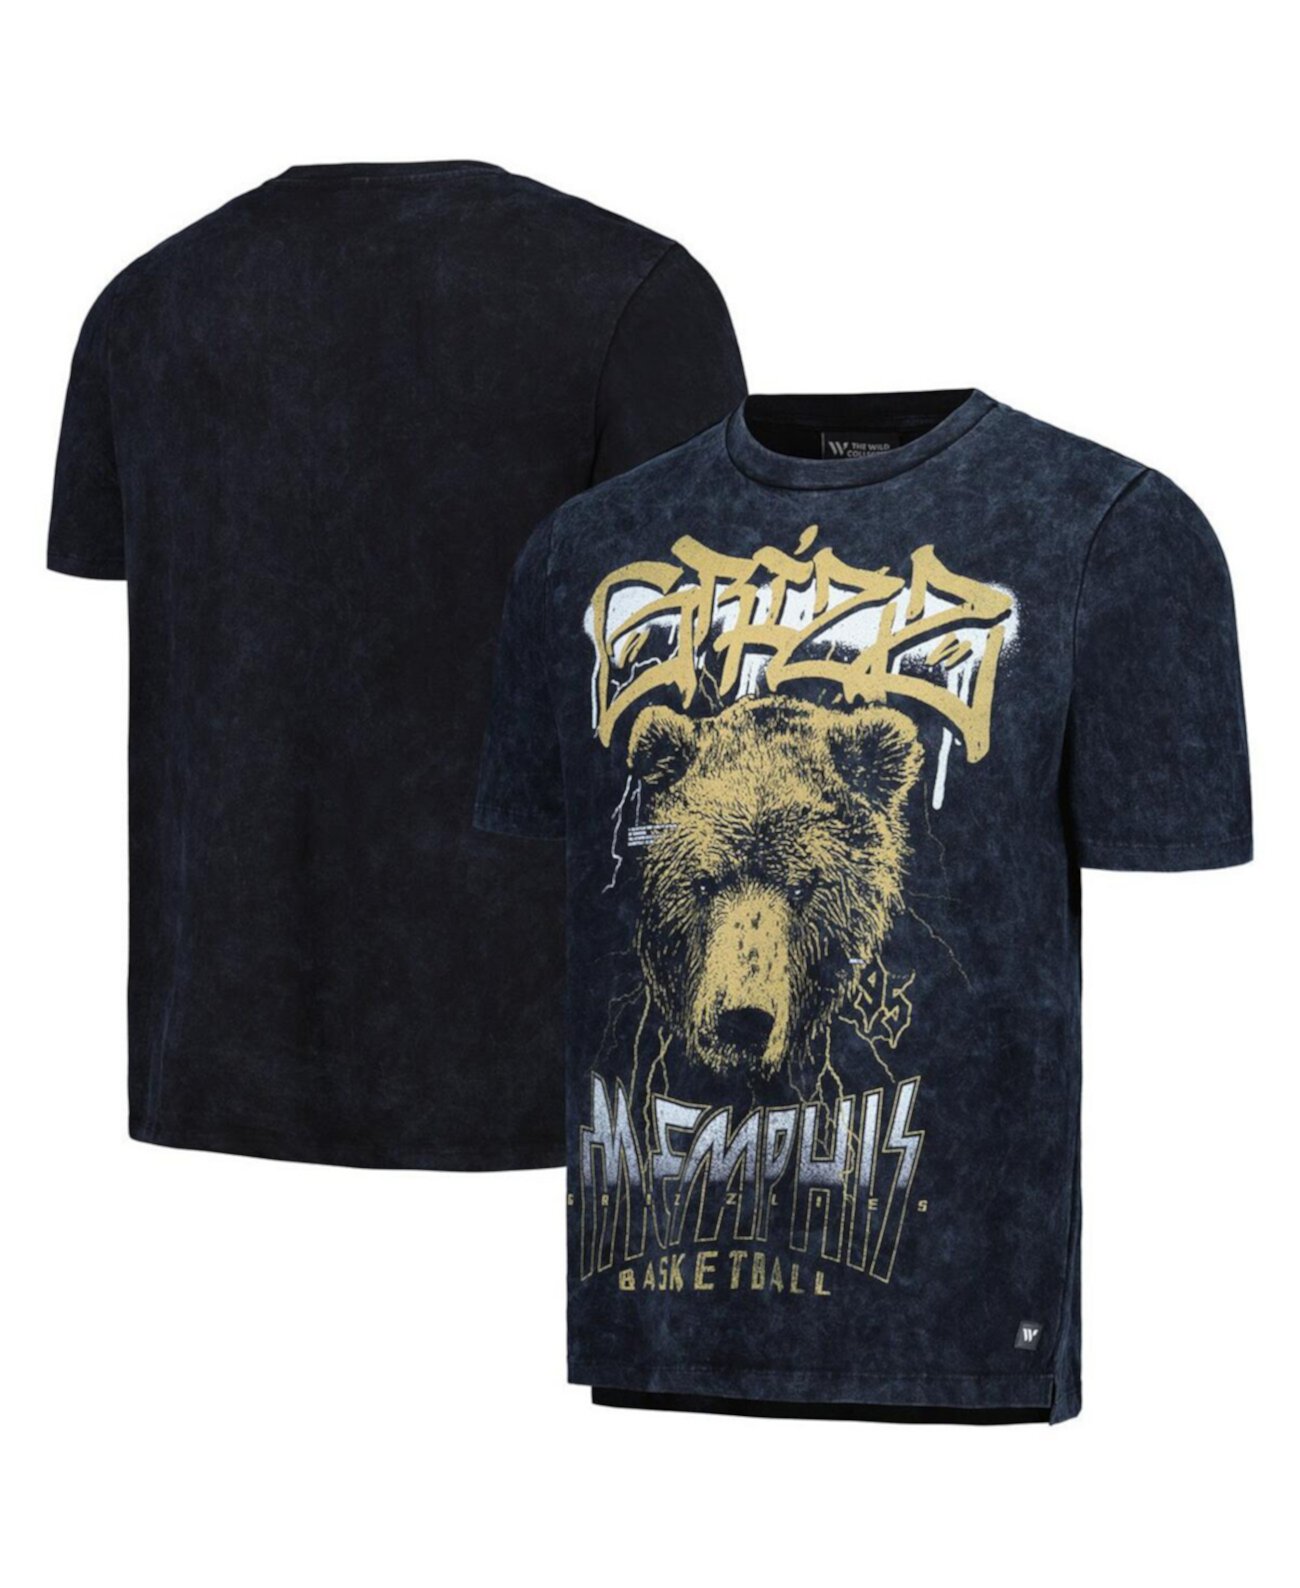 Men's and Women's Black Memphis Grizzlies Tour Band T-Shirt The Wild Collective